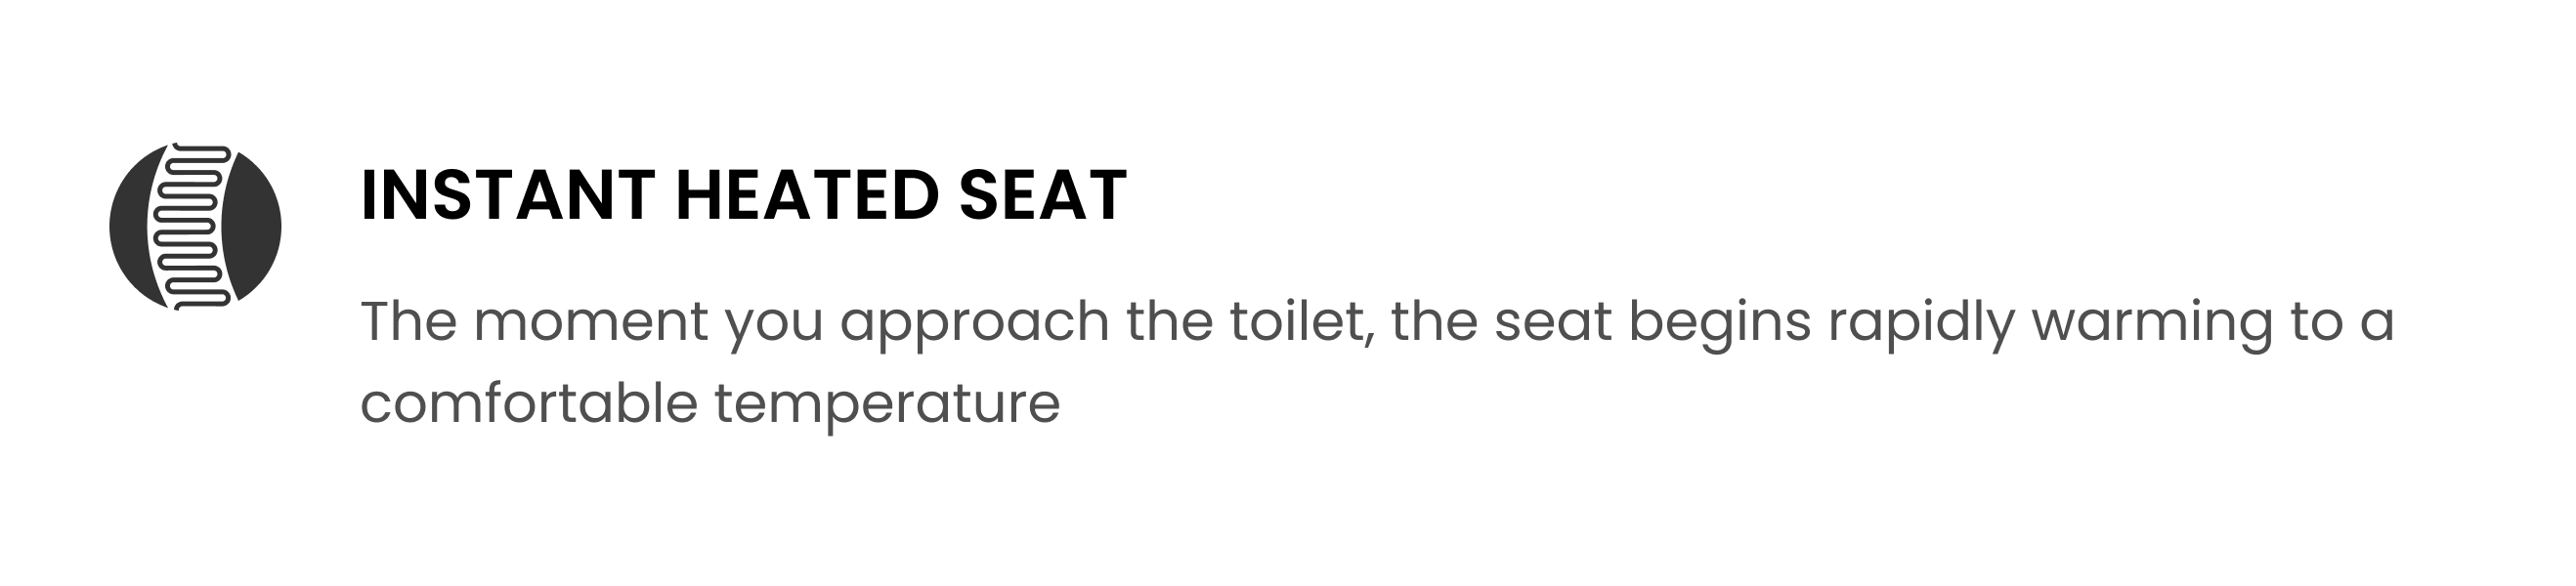 heatedseat One Piece Toilet (NEOREST XH II)